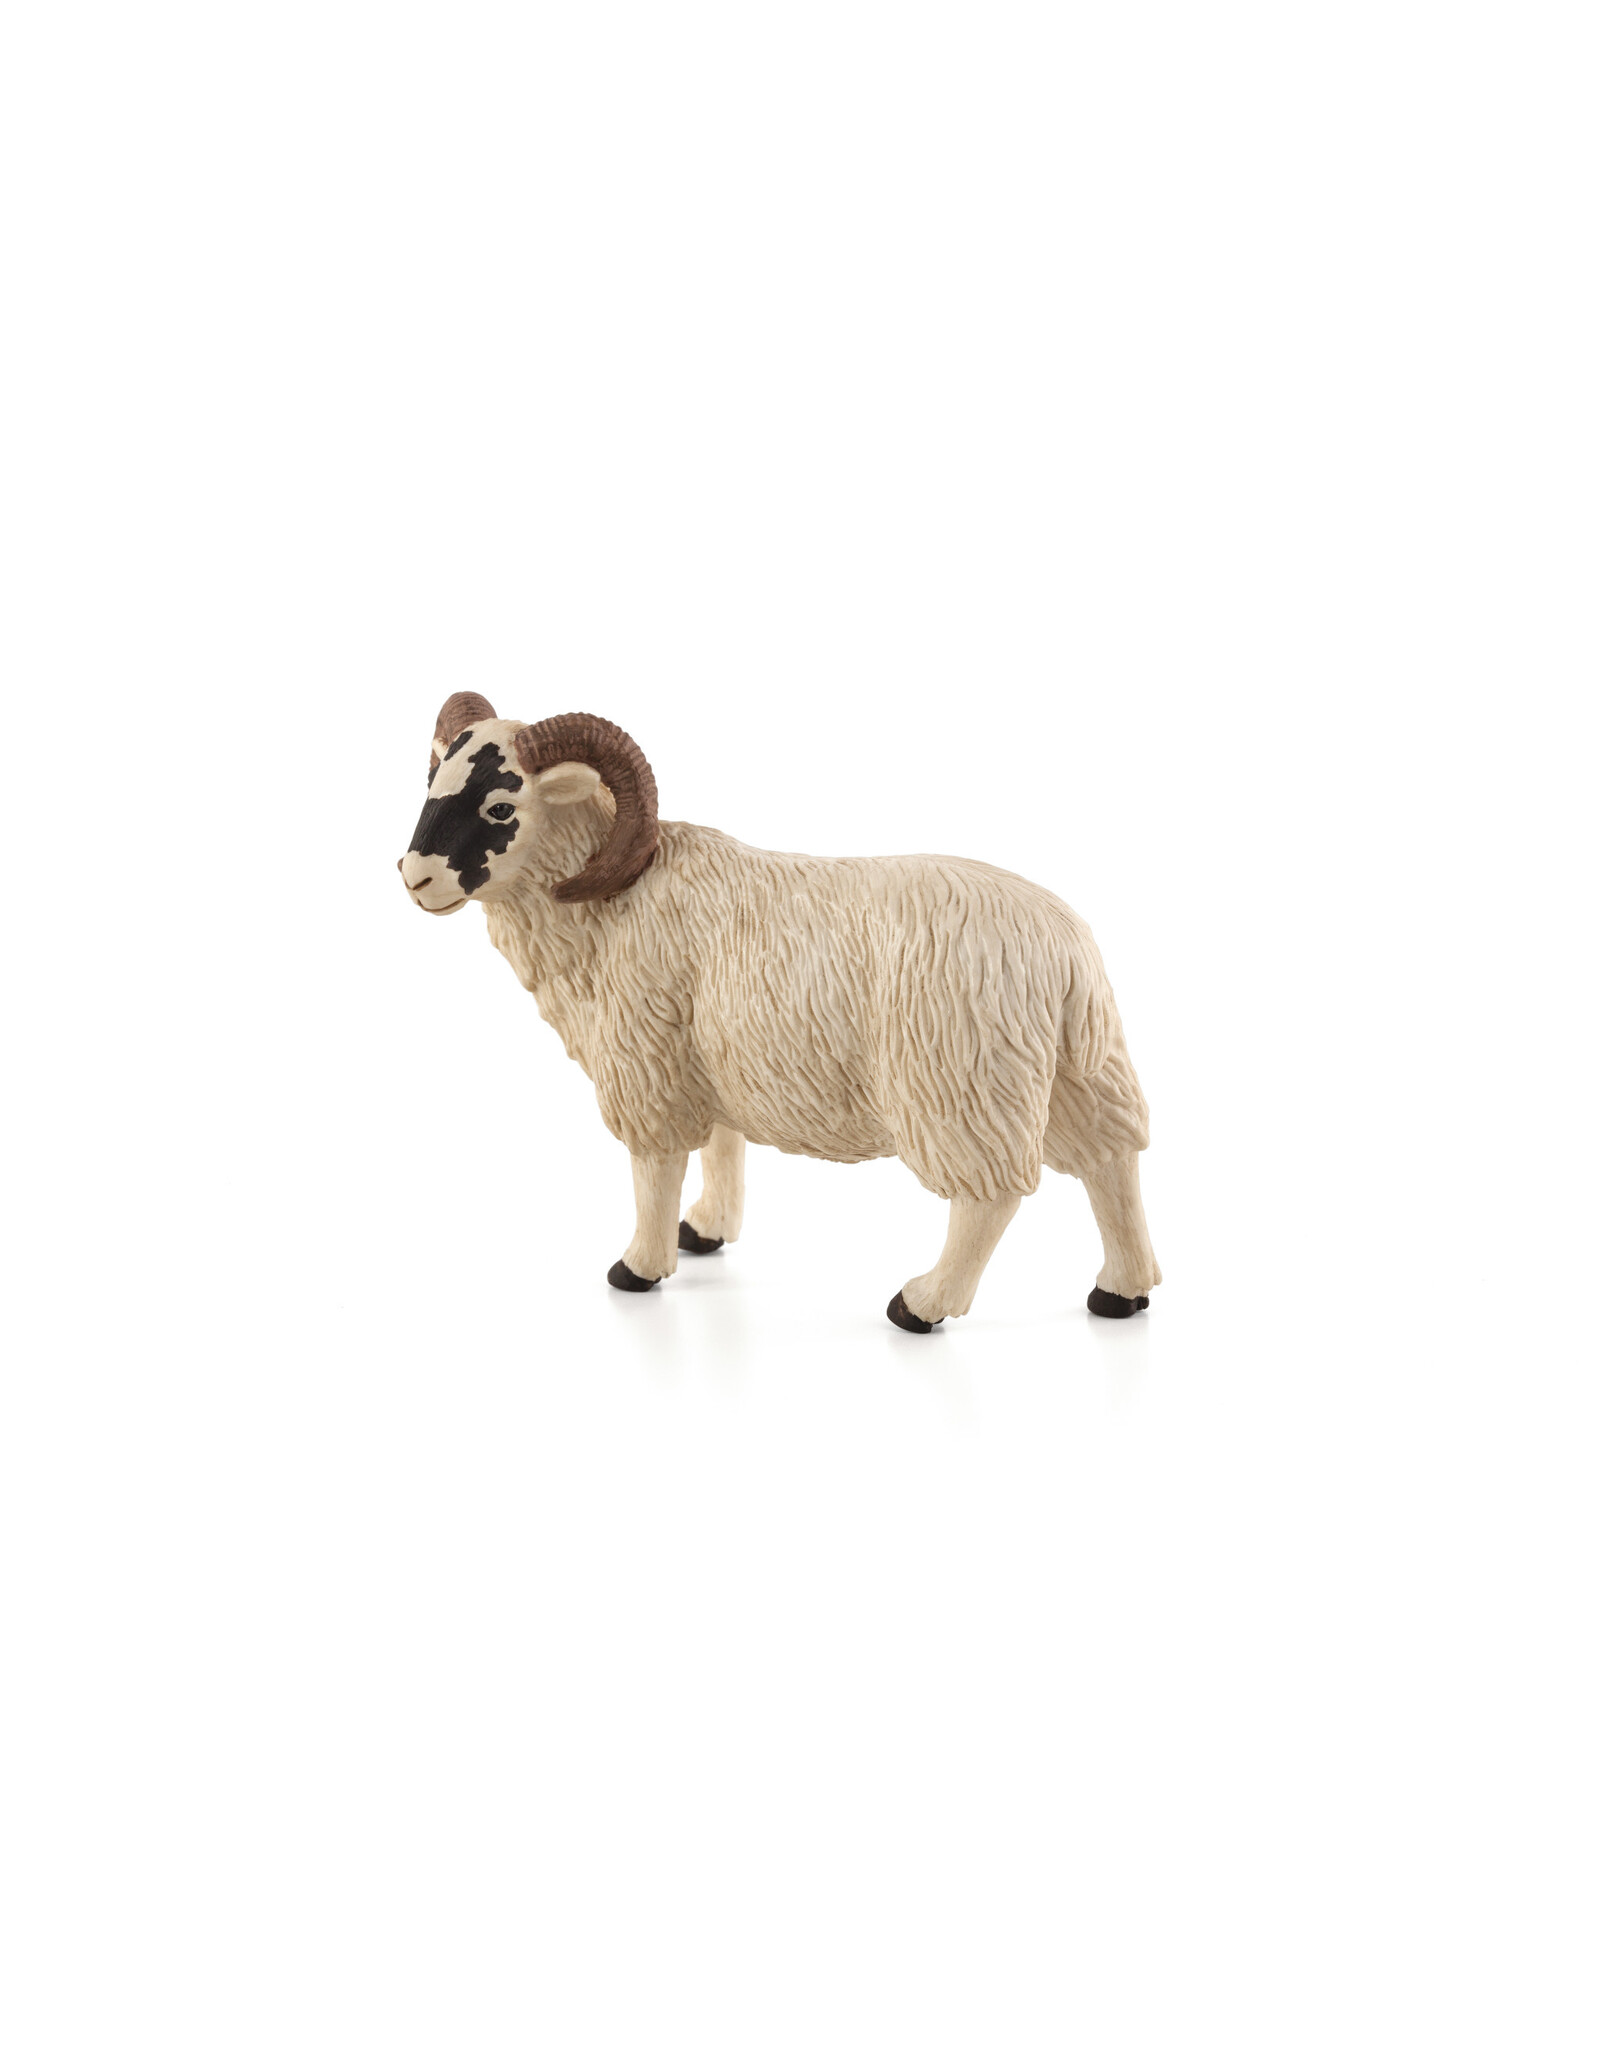 Black Faced Sheep (Ram)